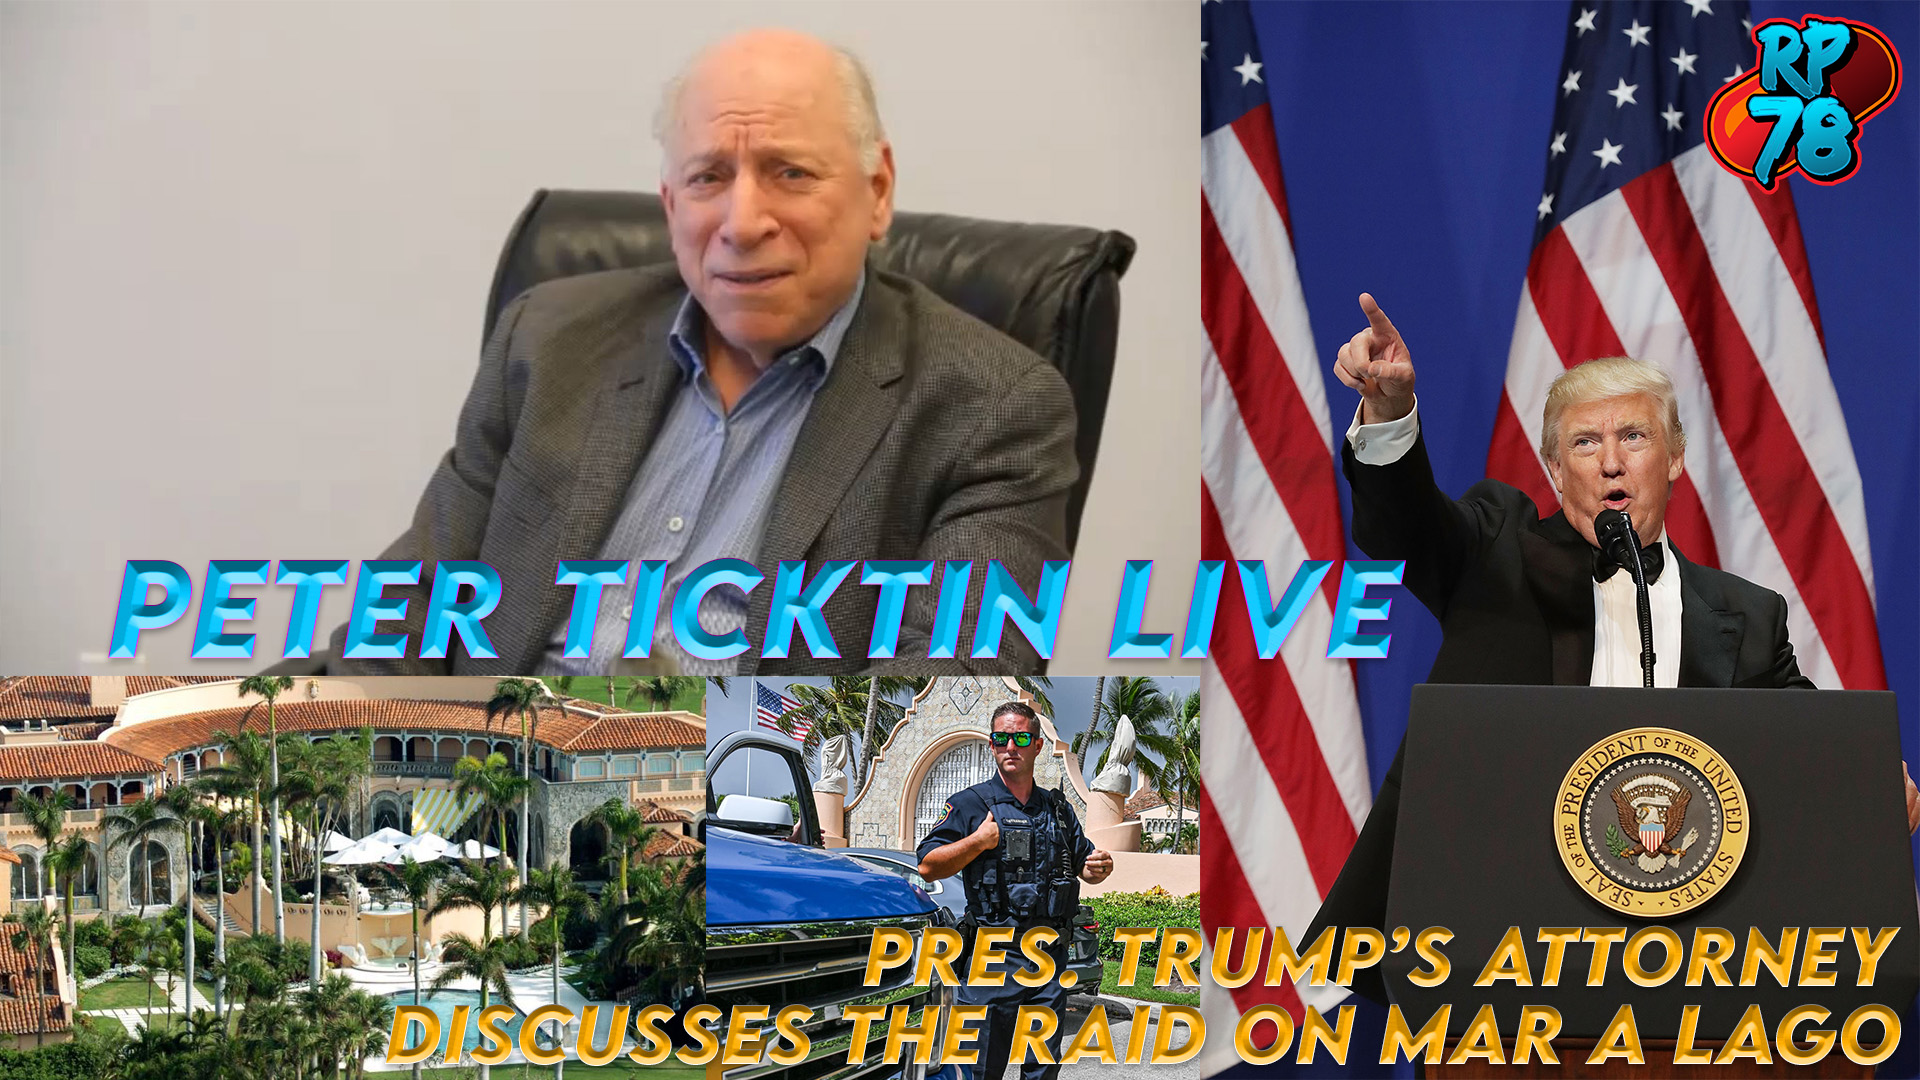 President Trump’s Attorney Peter Ticktin LIVE - The Raid on Mar a Lago